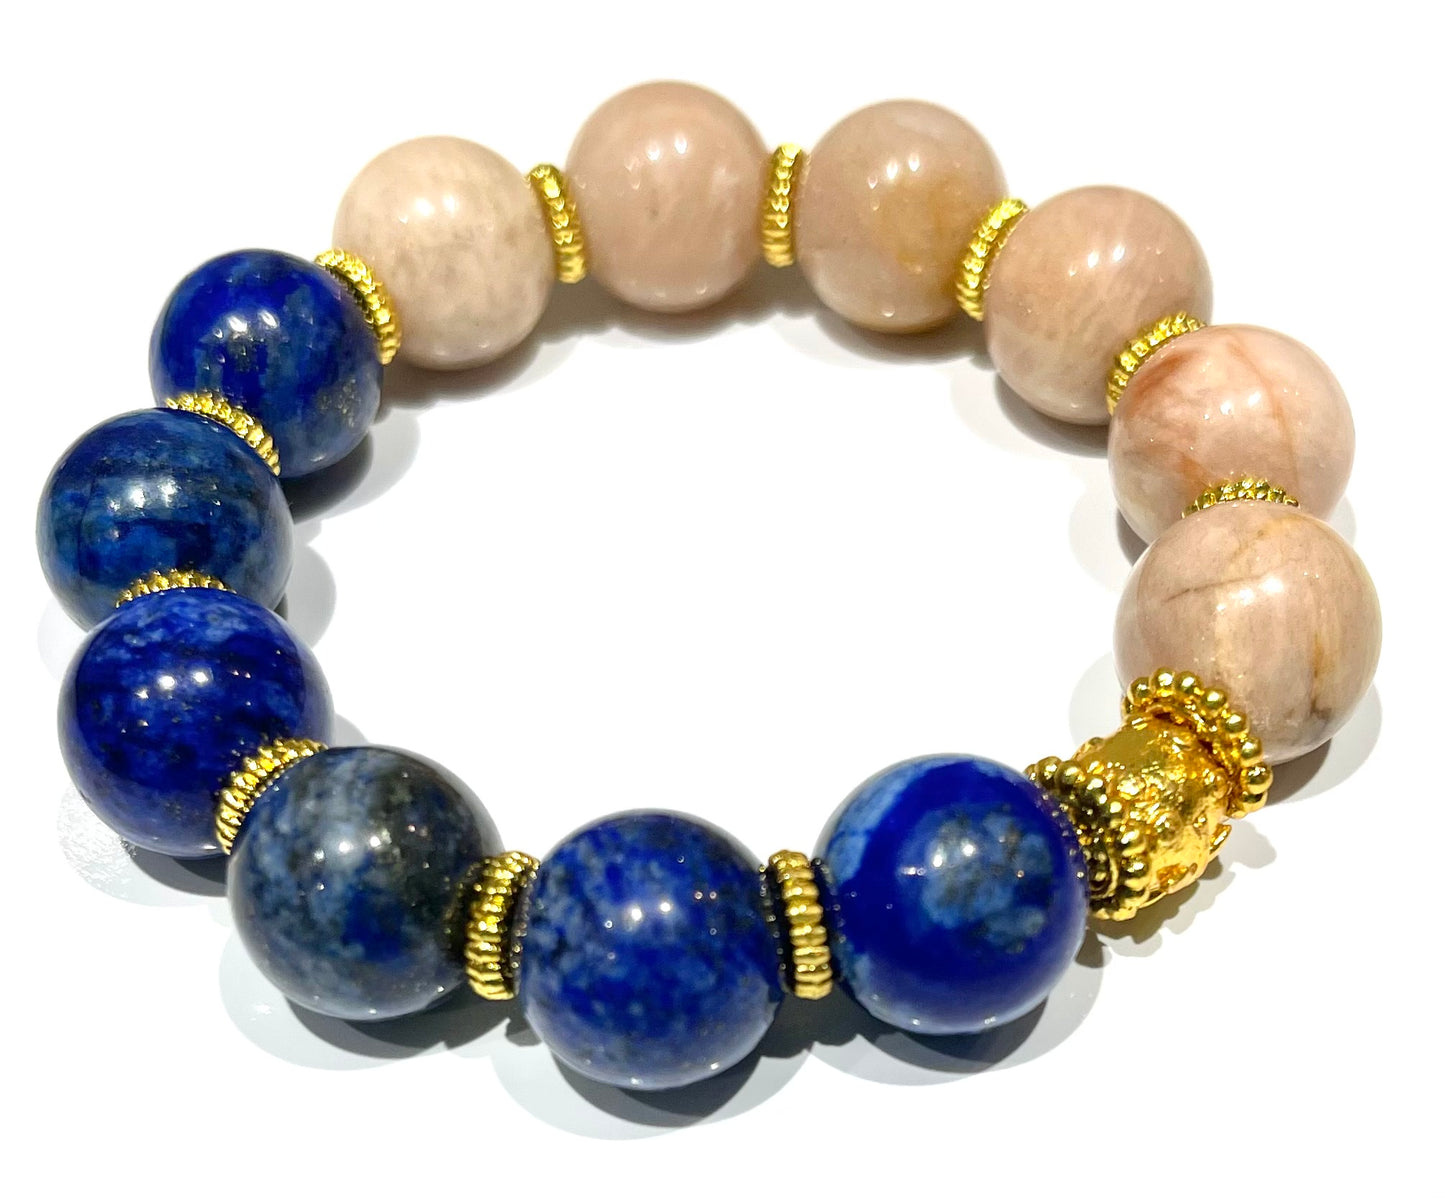 Lapis Lazuli and Ivory Jade Statement Bracelet